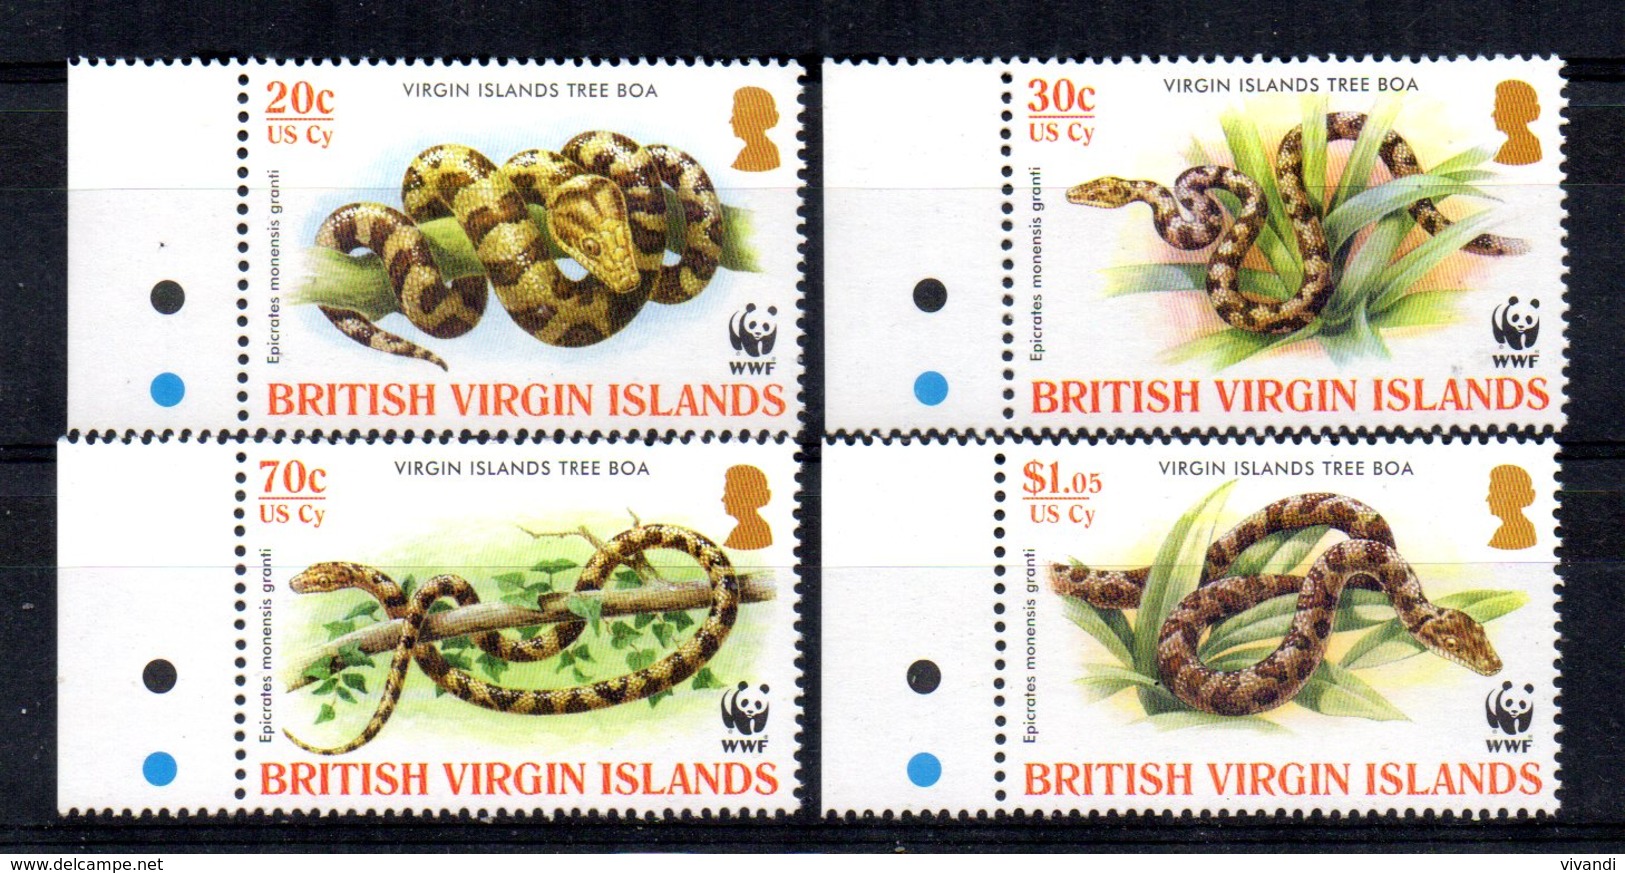 British Virgin Islands - 2005 - Endangered Species/Tree Boa - MNH - British Virgin Islands